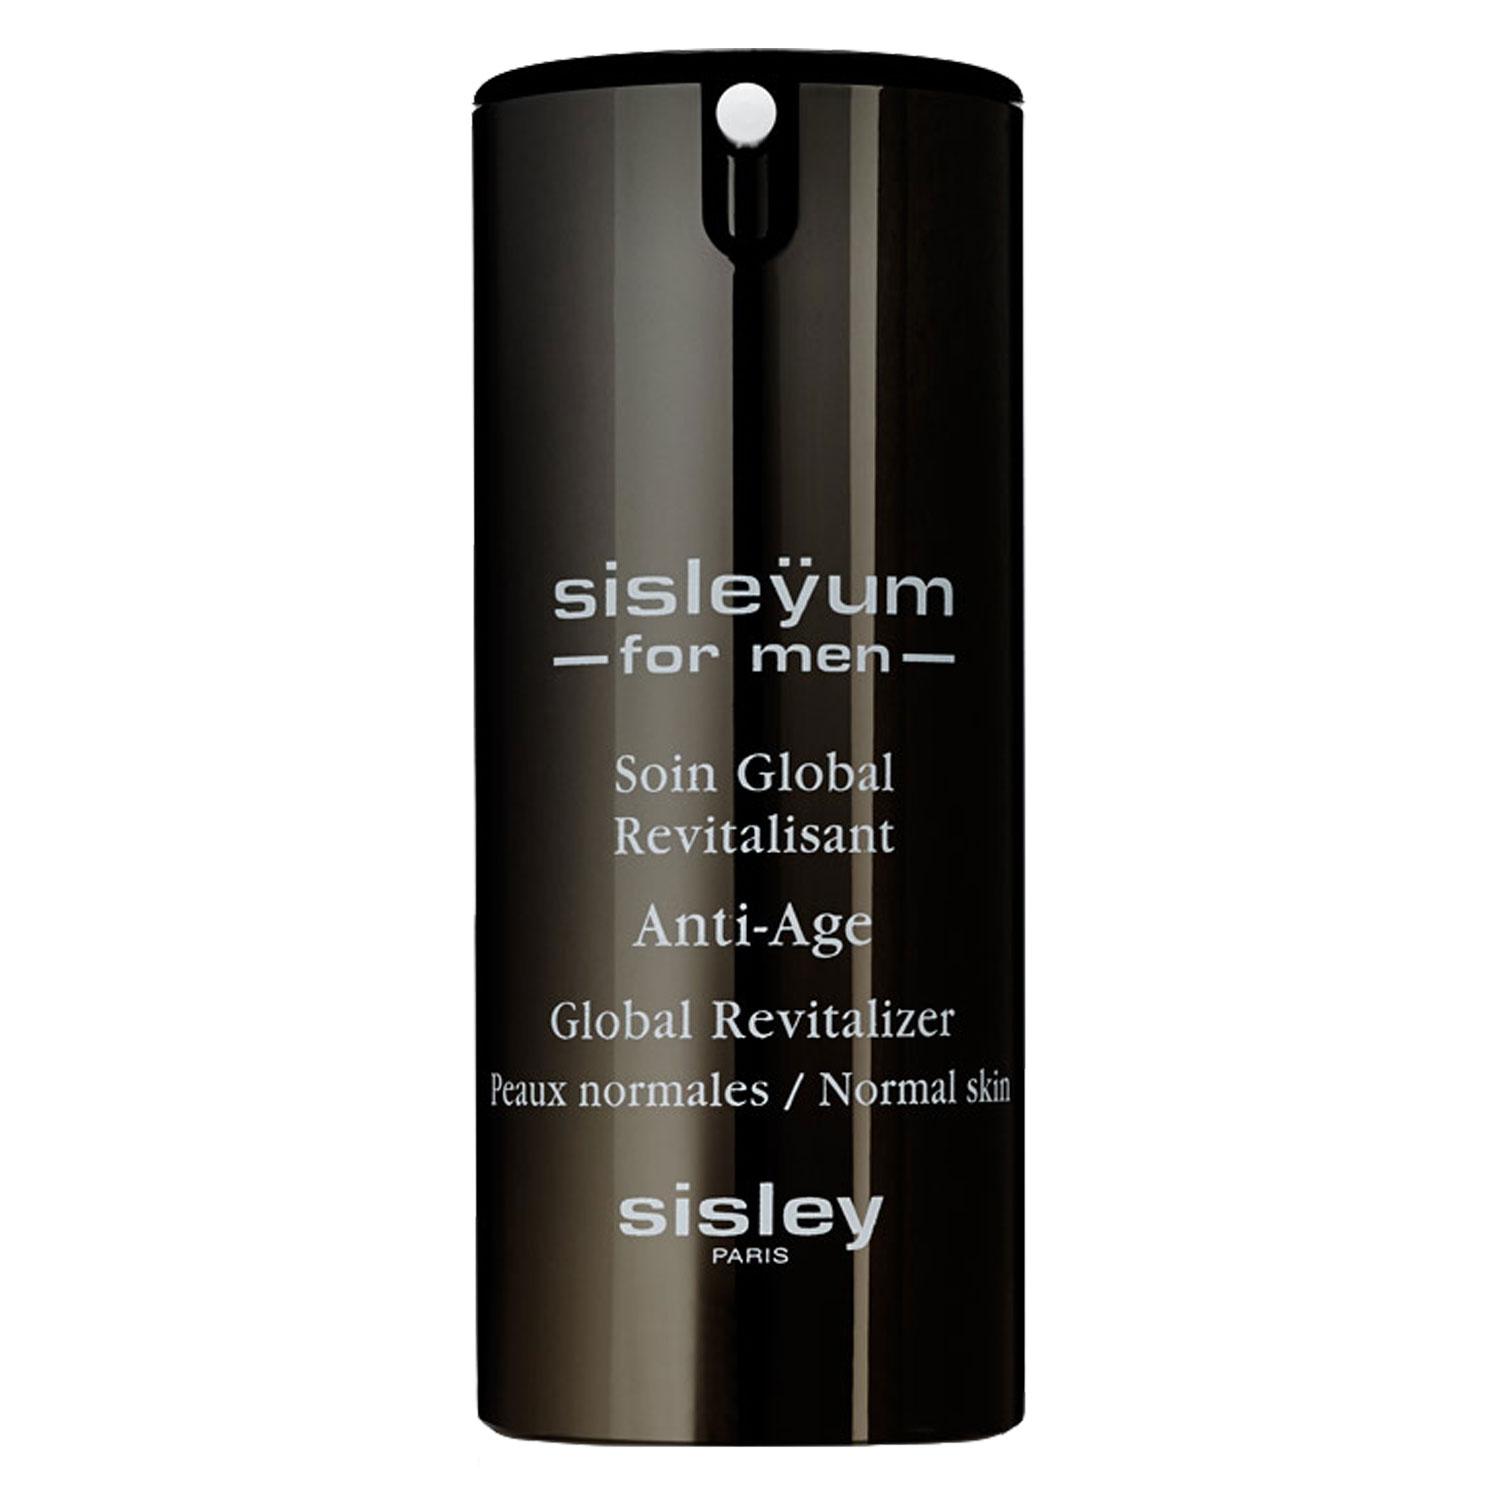 Sisleÿum - For Men Soin Global Revitalisant peaux normales